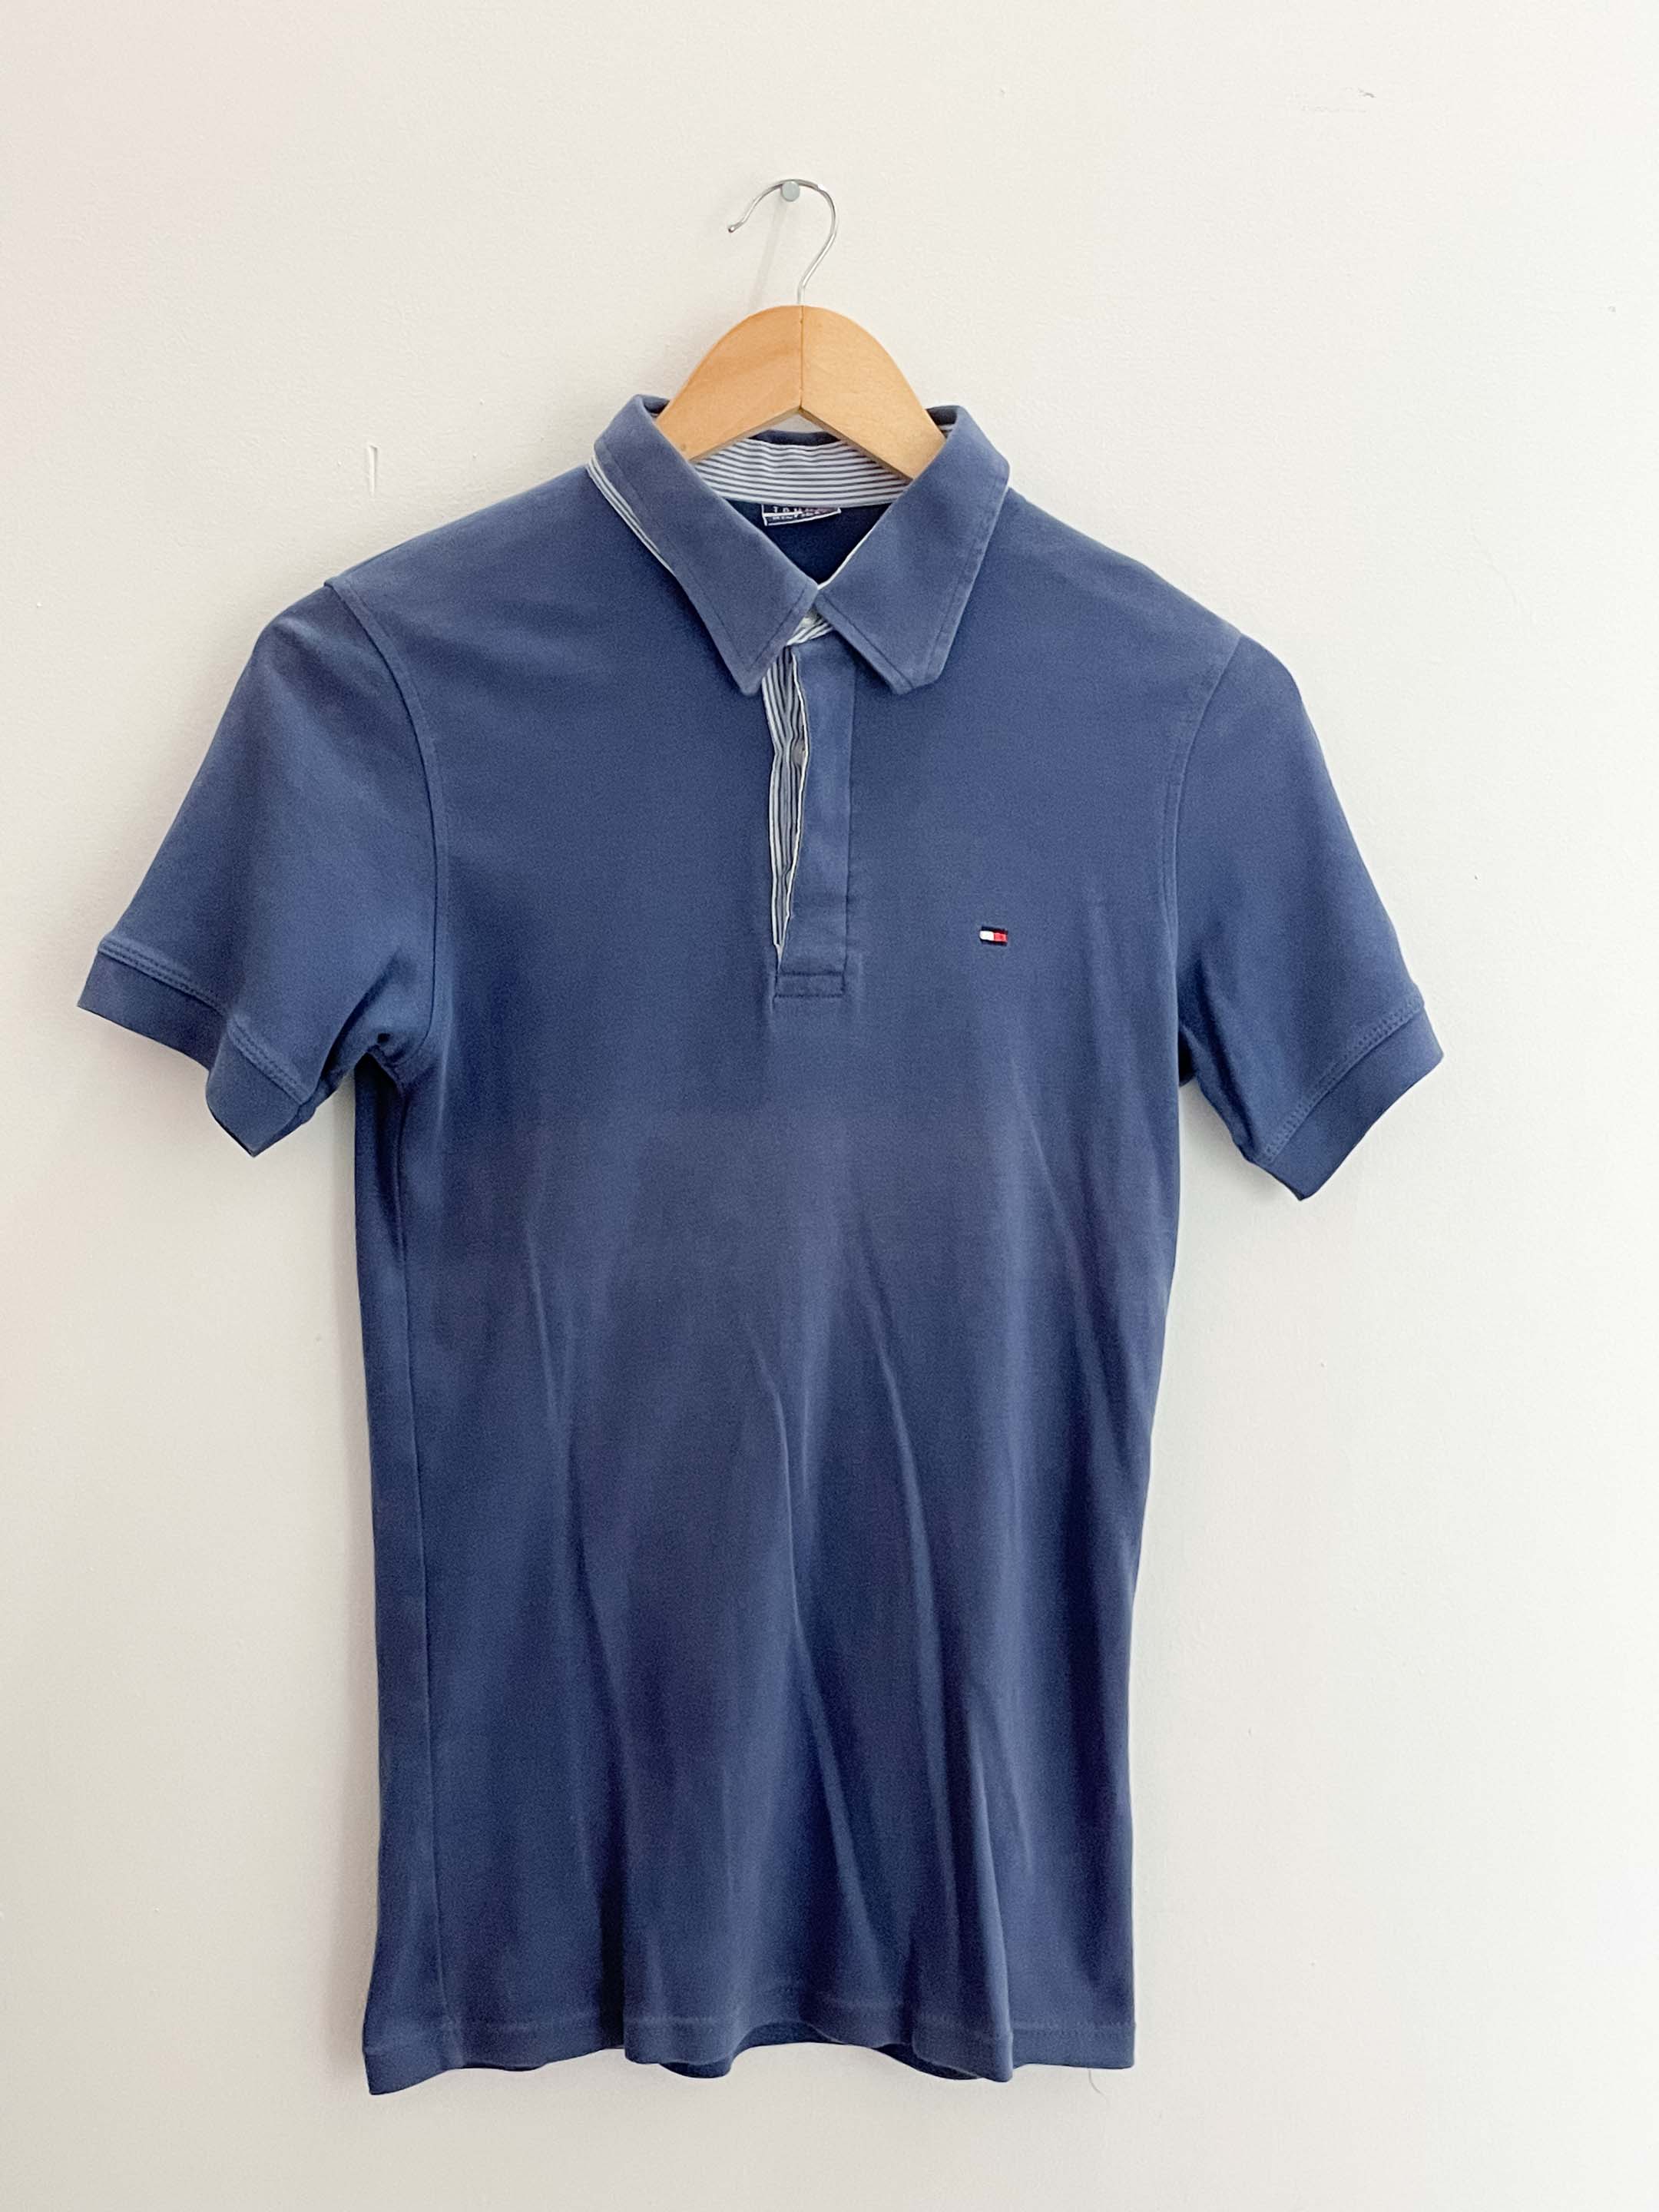 Vintage blue mens tommy hilfiger polo shirt size M